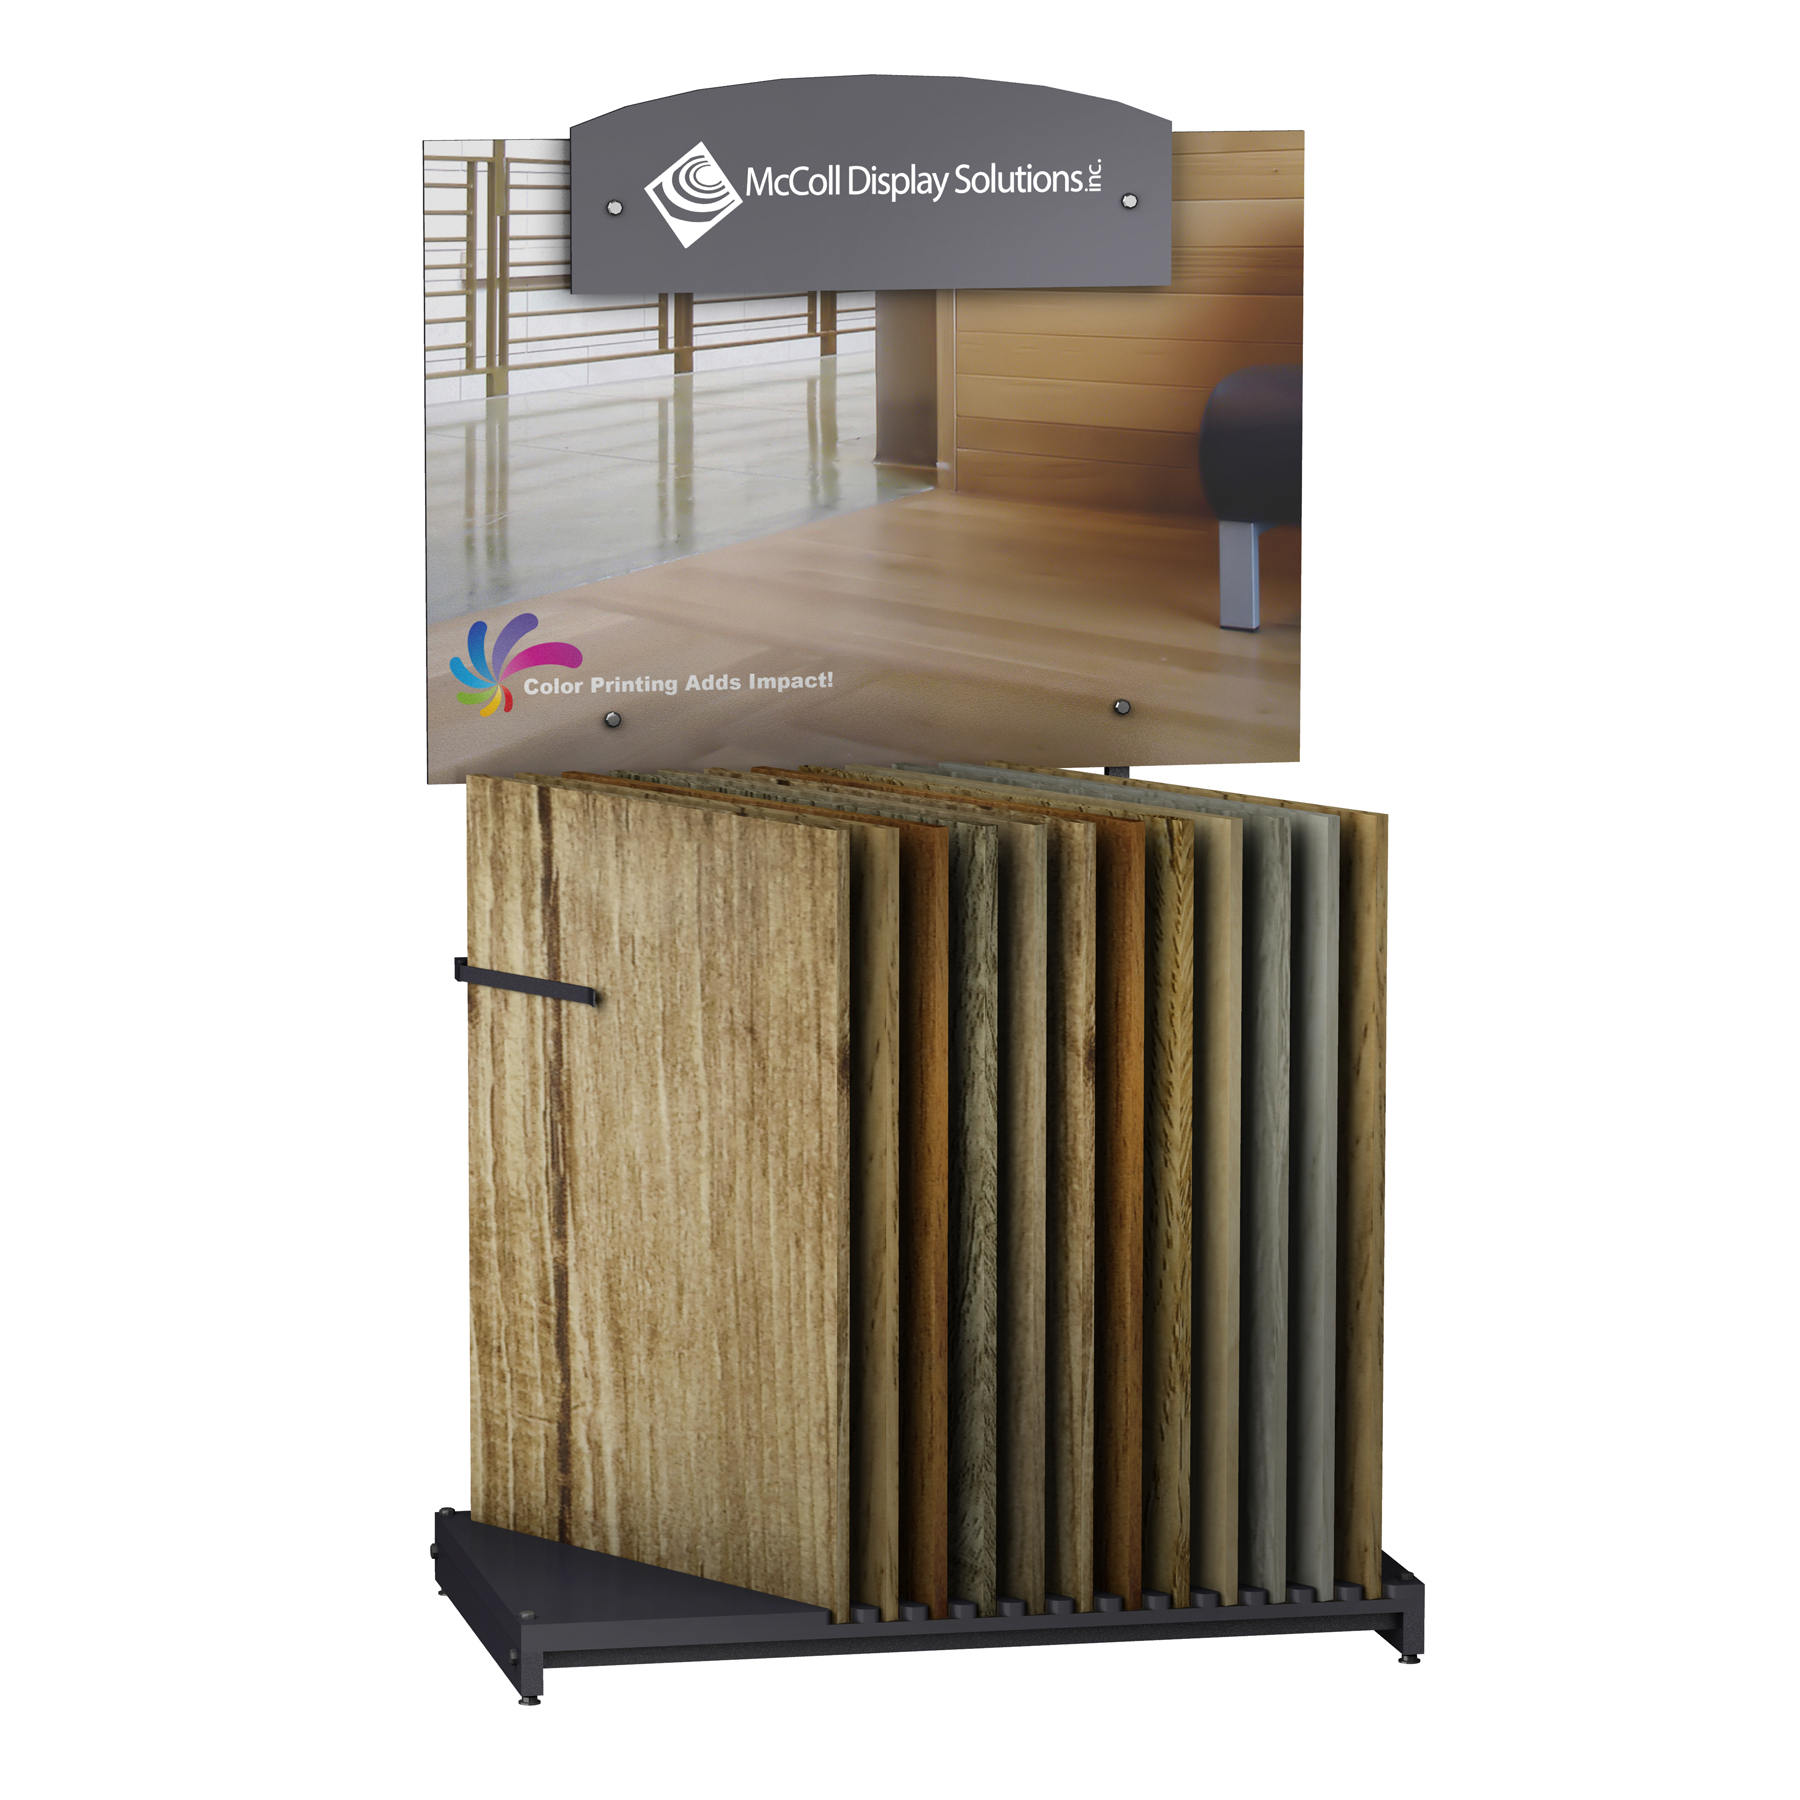 CD101 Slotted Floor Stand Signage Displays Wood Tile Marble Stone Flooring McColl Display